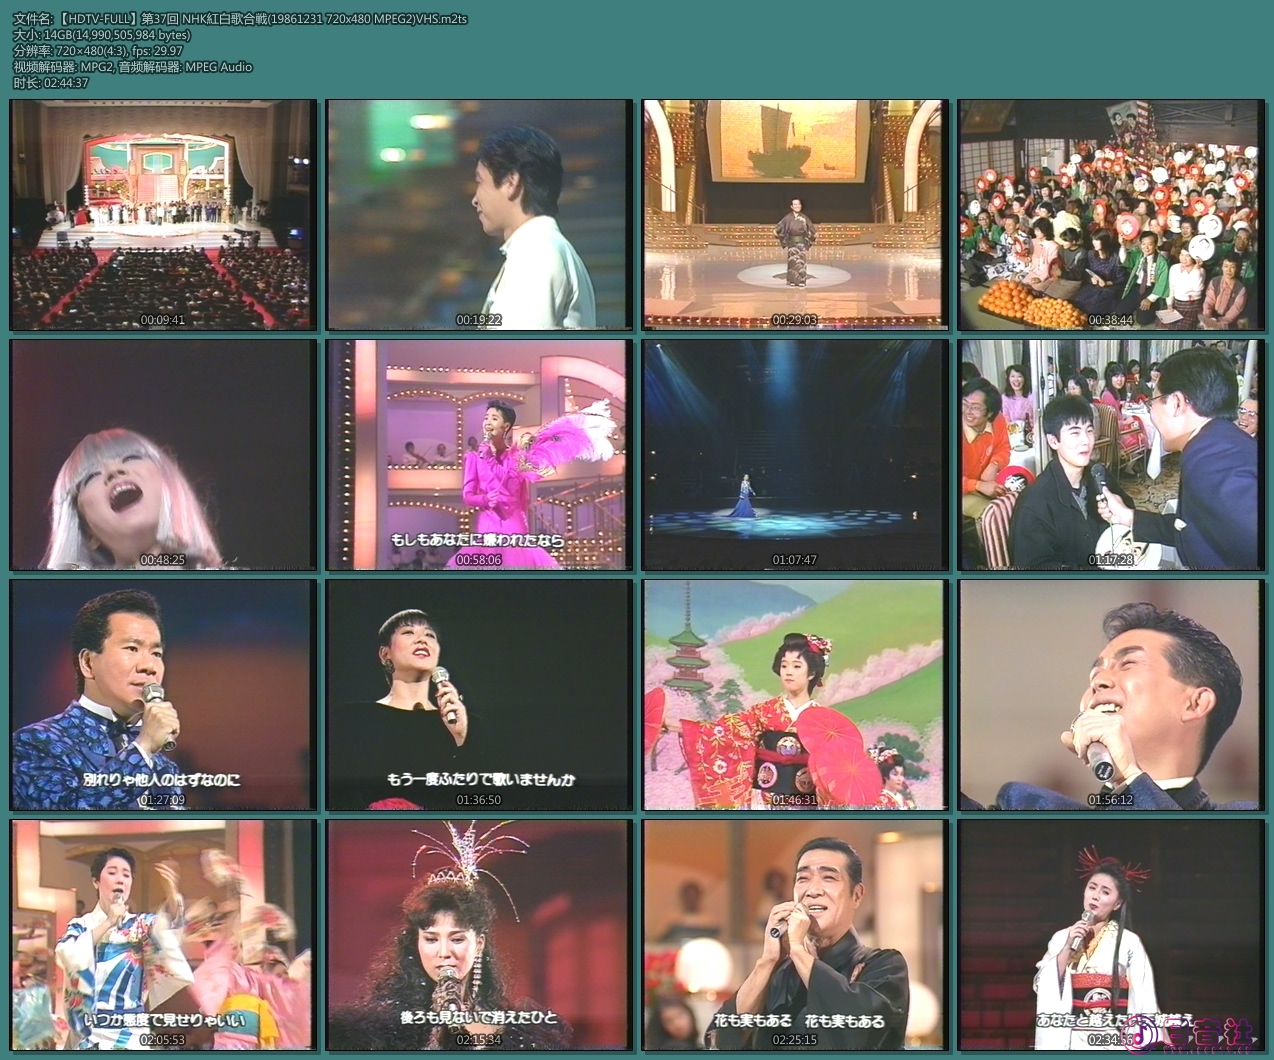 【HDTV-FULL】第37回 NHK紅白歌合戦(19861231 720x480 MPEG2)VHS.m2ts.jpg